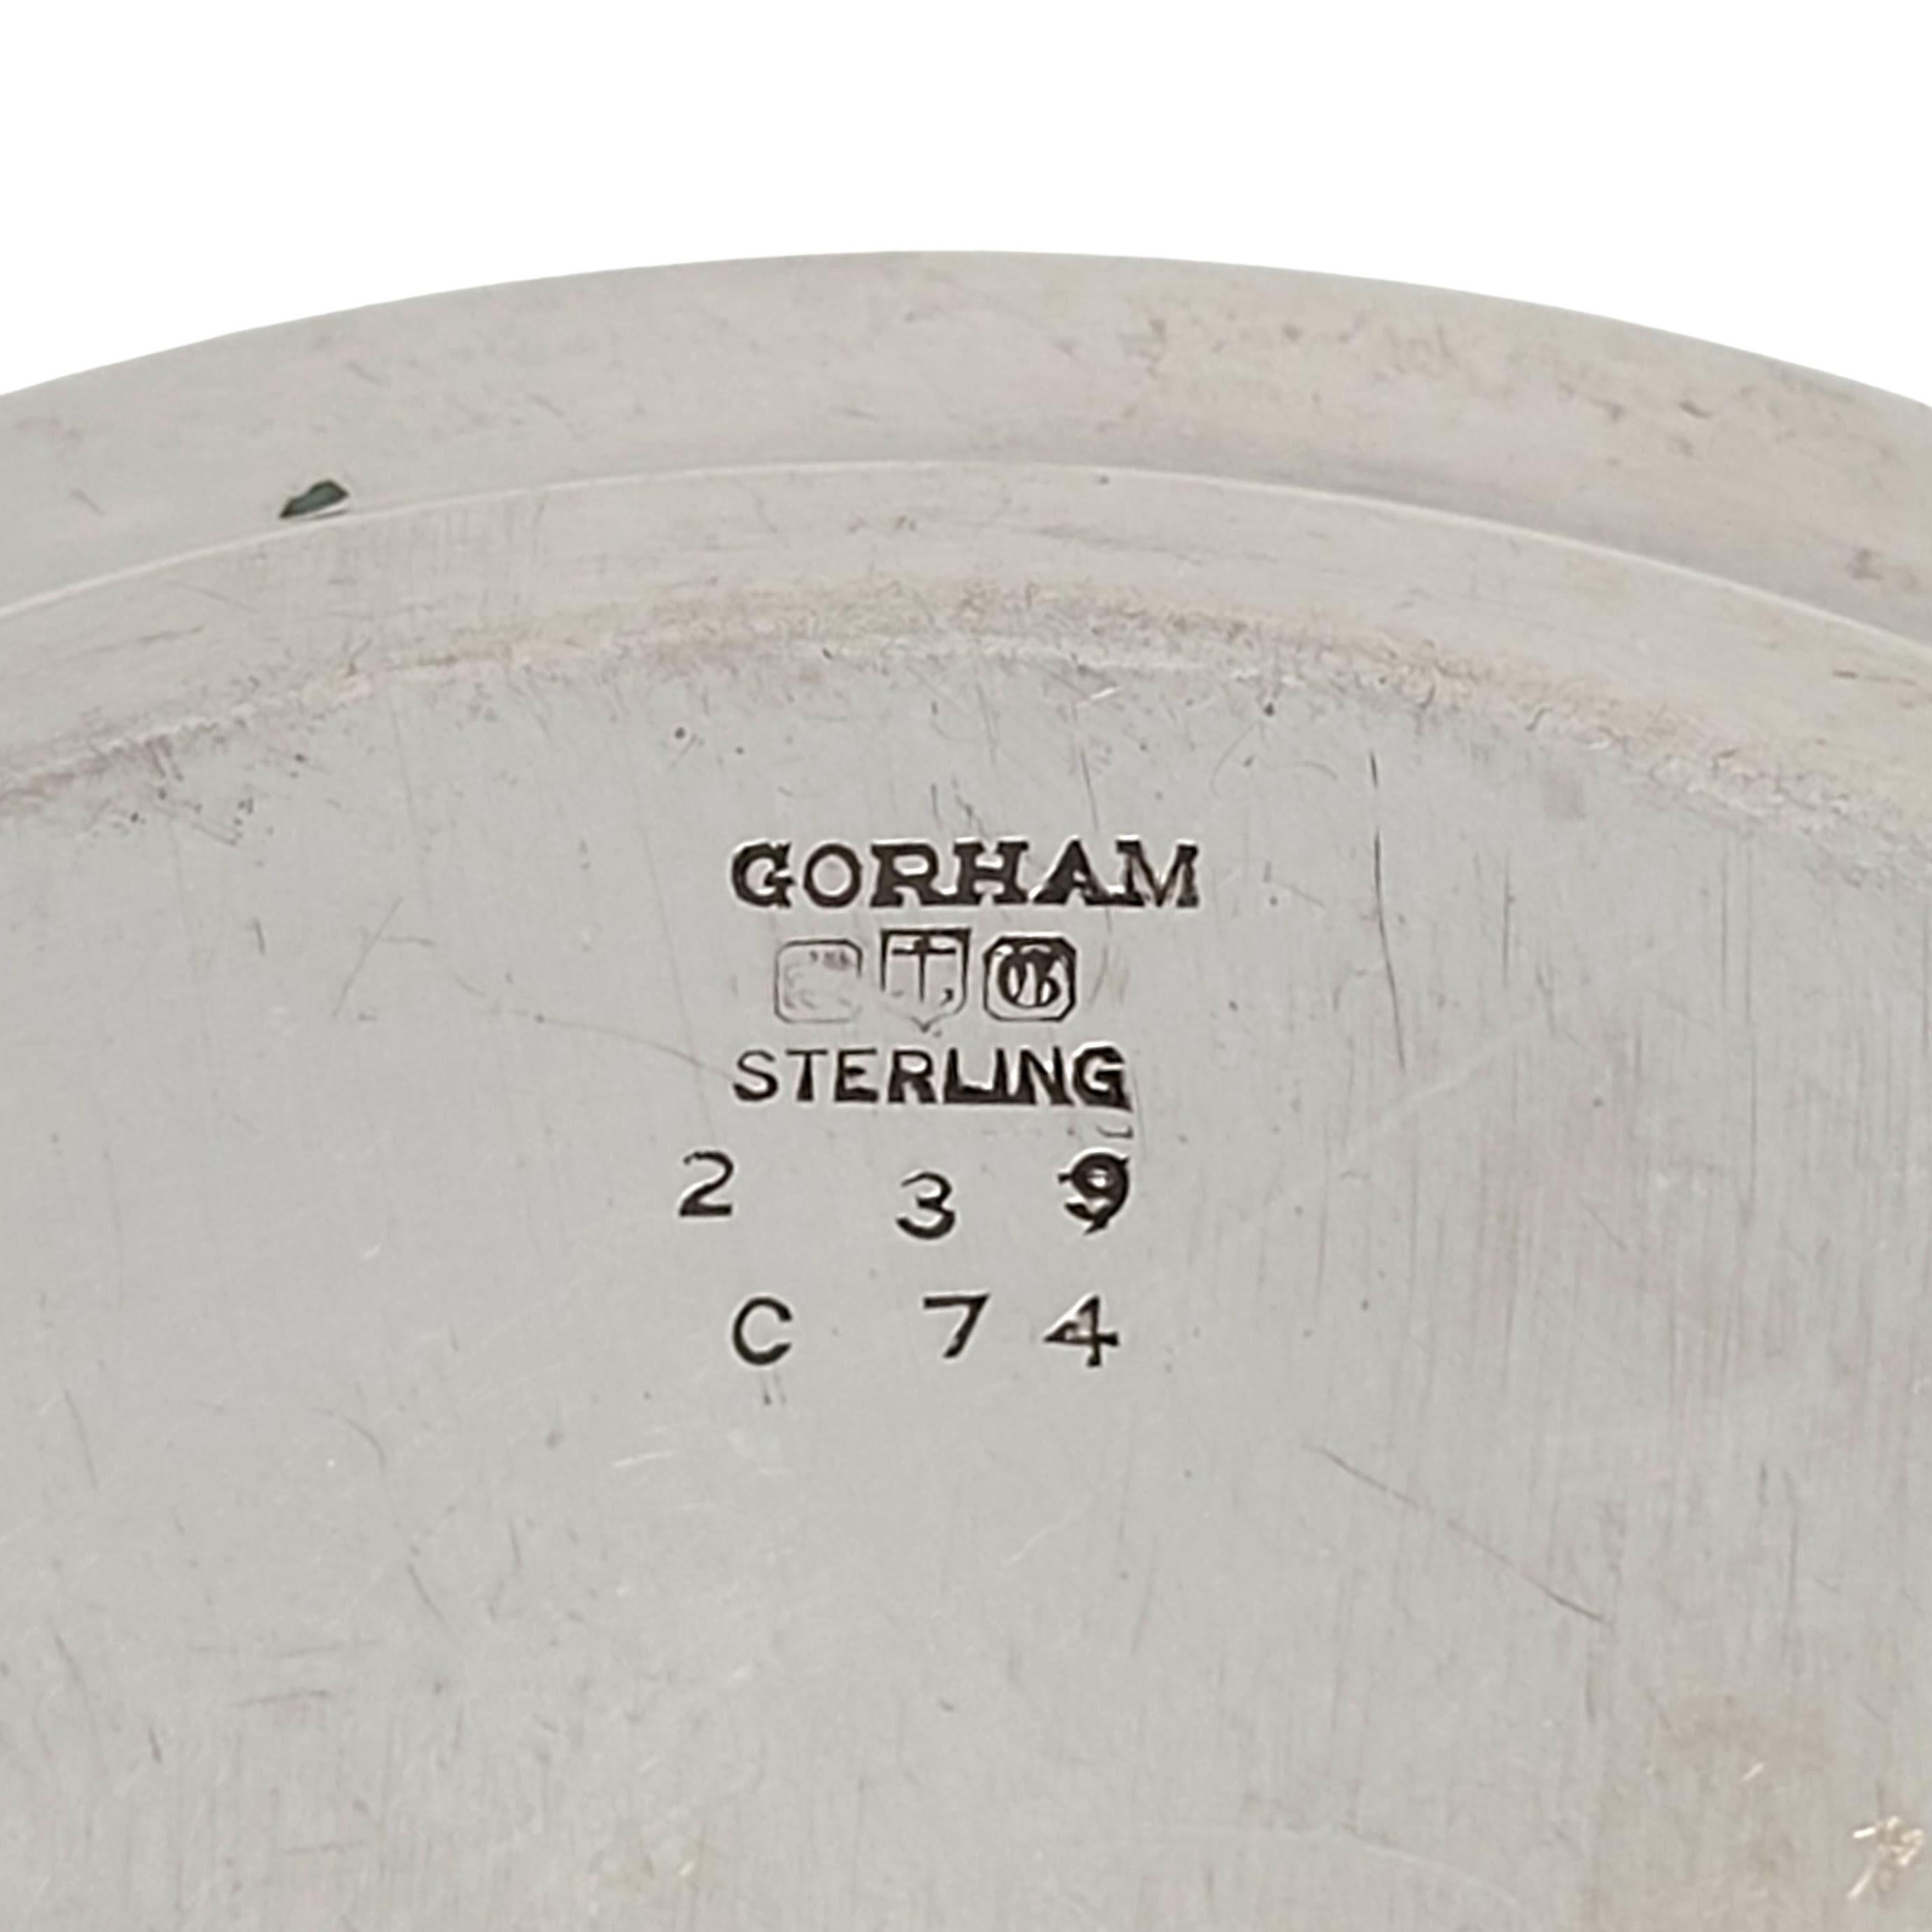 Gorham Sterling Silver Nursery Rhyme Child's Bowl Porringer with Engraving 6